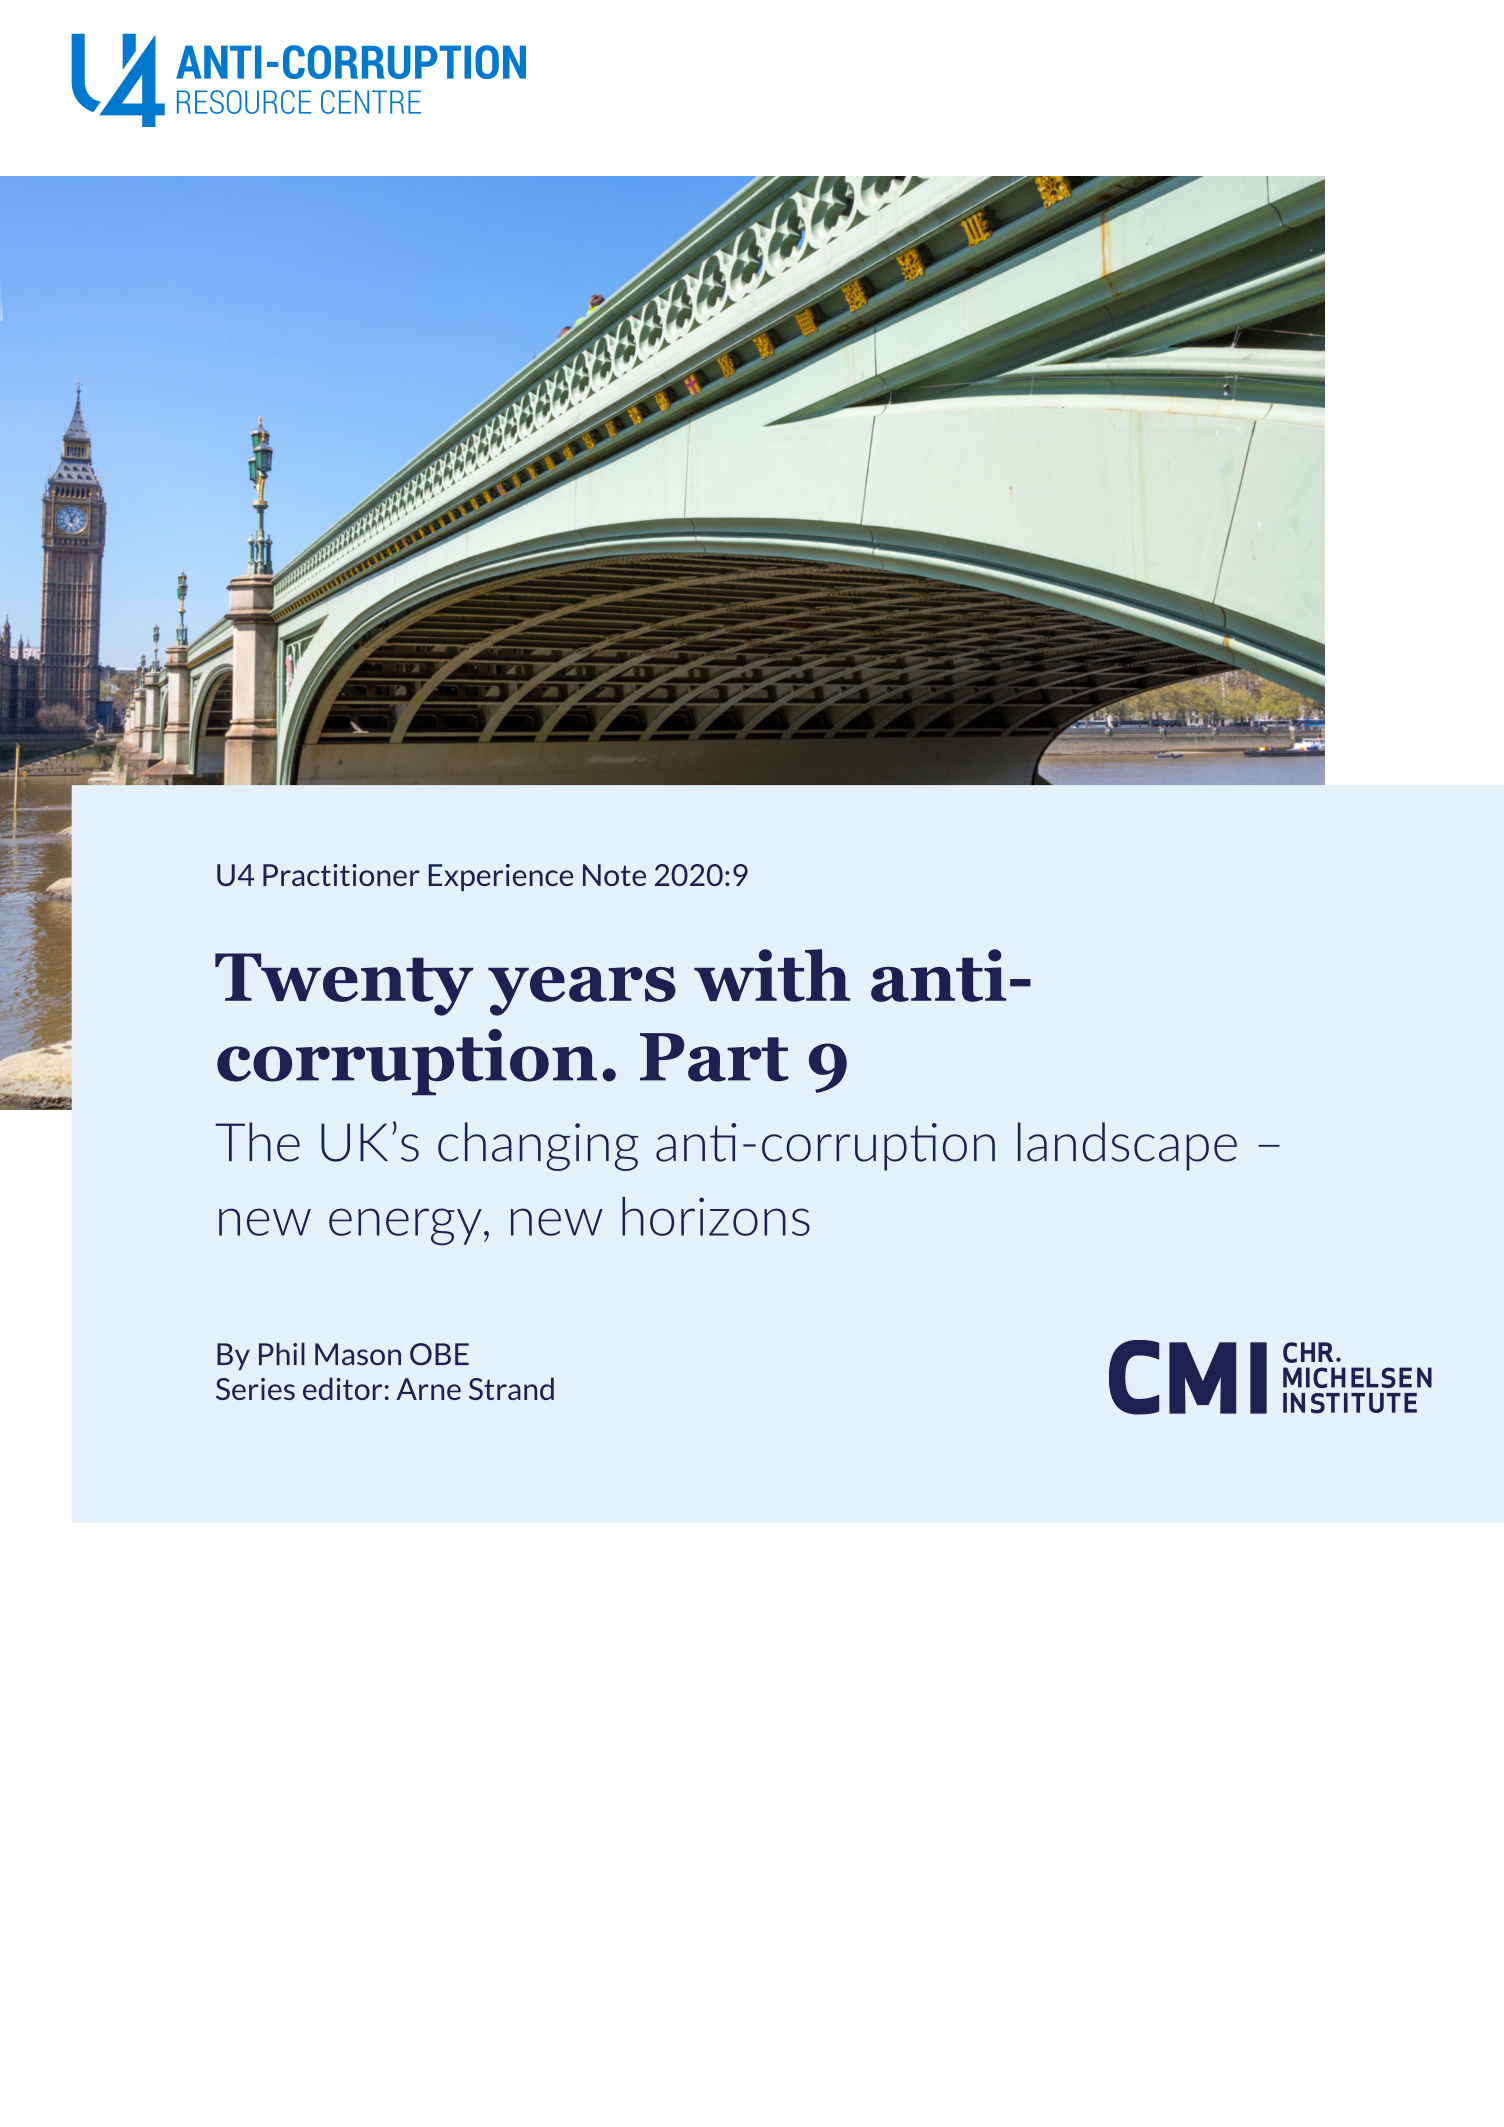 Twenty years with anti-corruption. Part 9